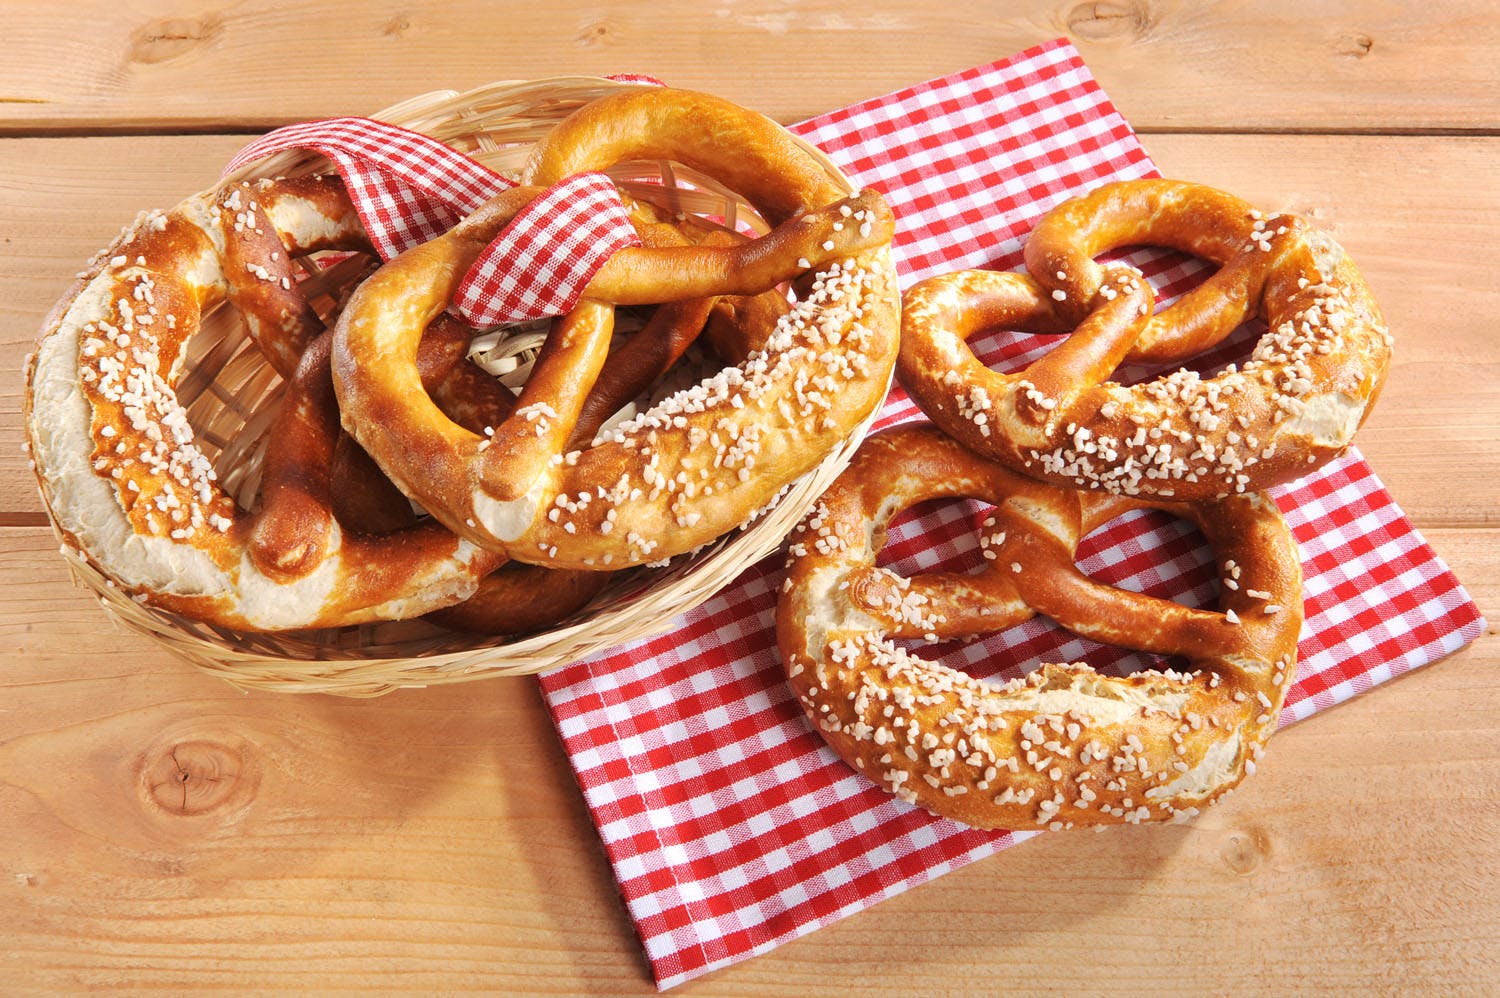 laugenbrezeln - typical german pretzels